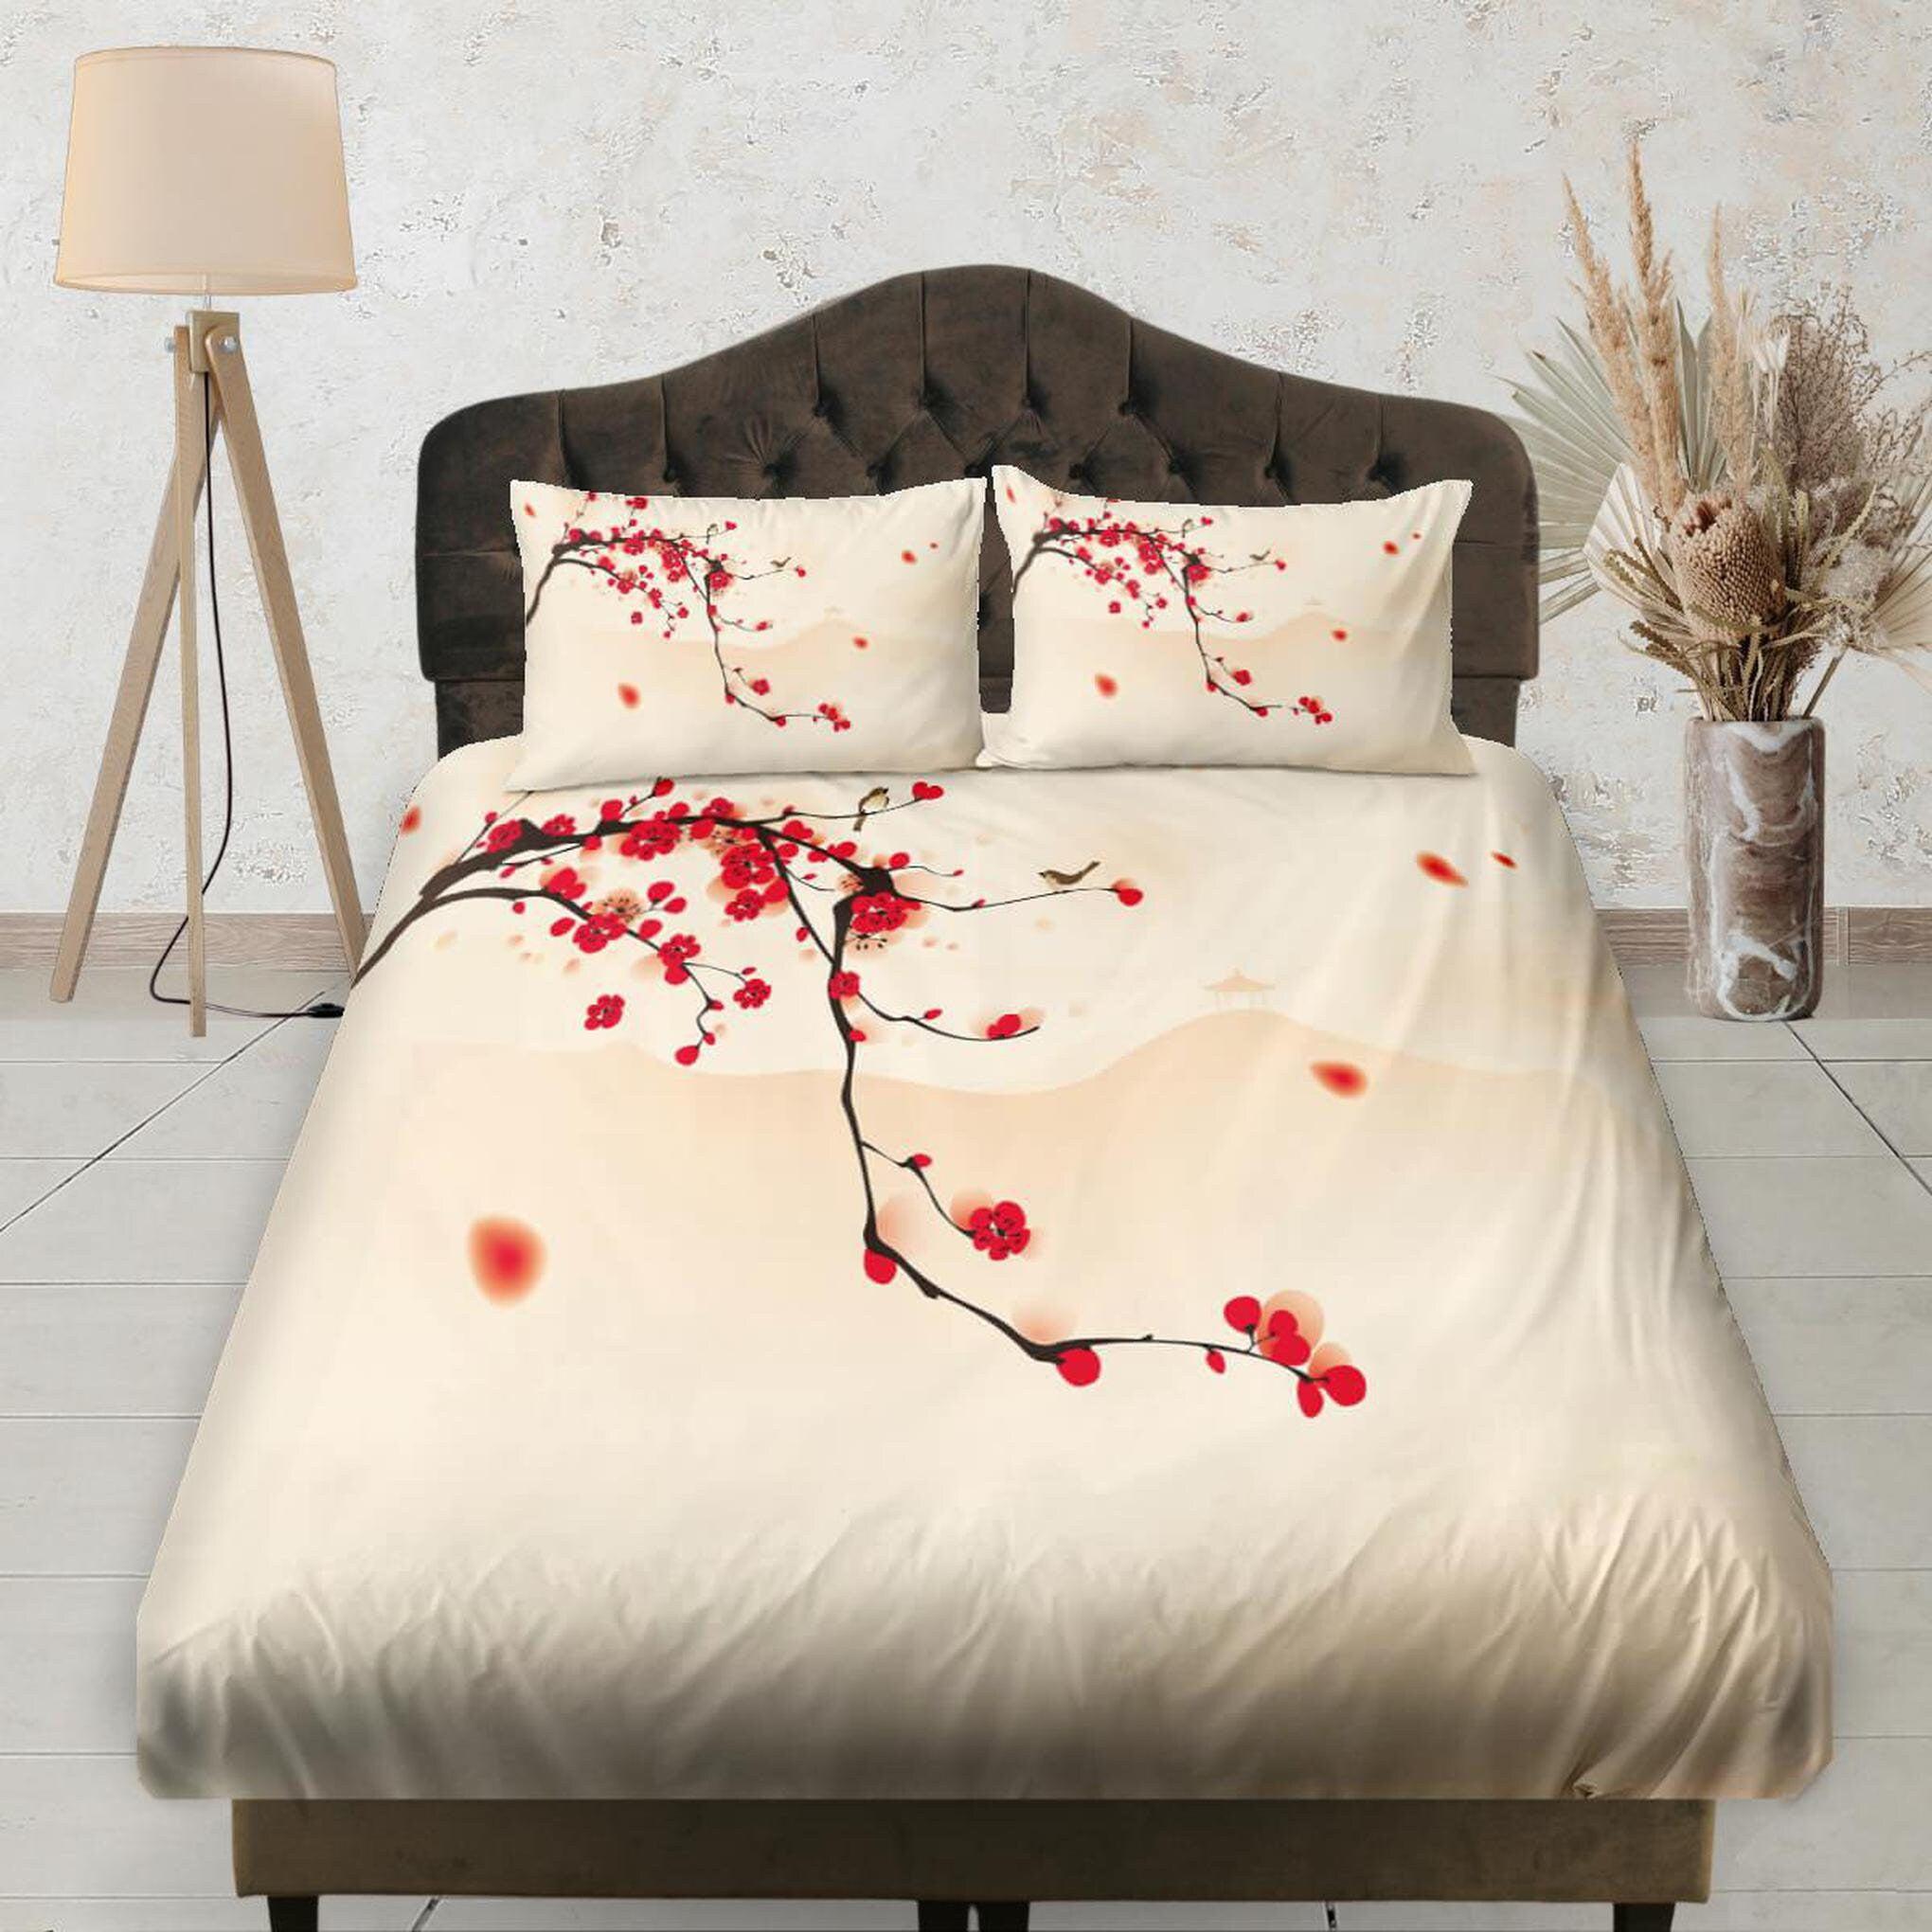 daintyduvet Beige Bedding, Cherry Blossoms Fitted Bedsheet Deep Pocket, Floral Prints, Aesthetic Boho Bedding Set, Dorm Bedding, Shabby Chic Bedding